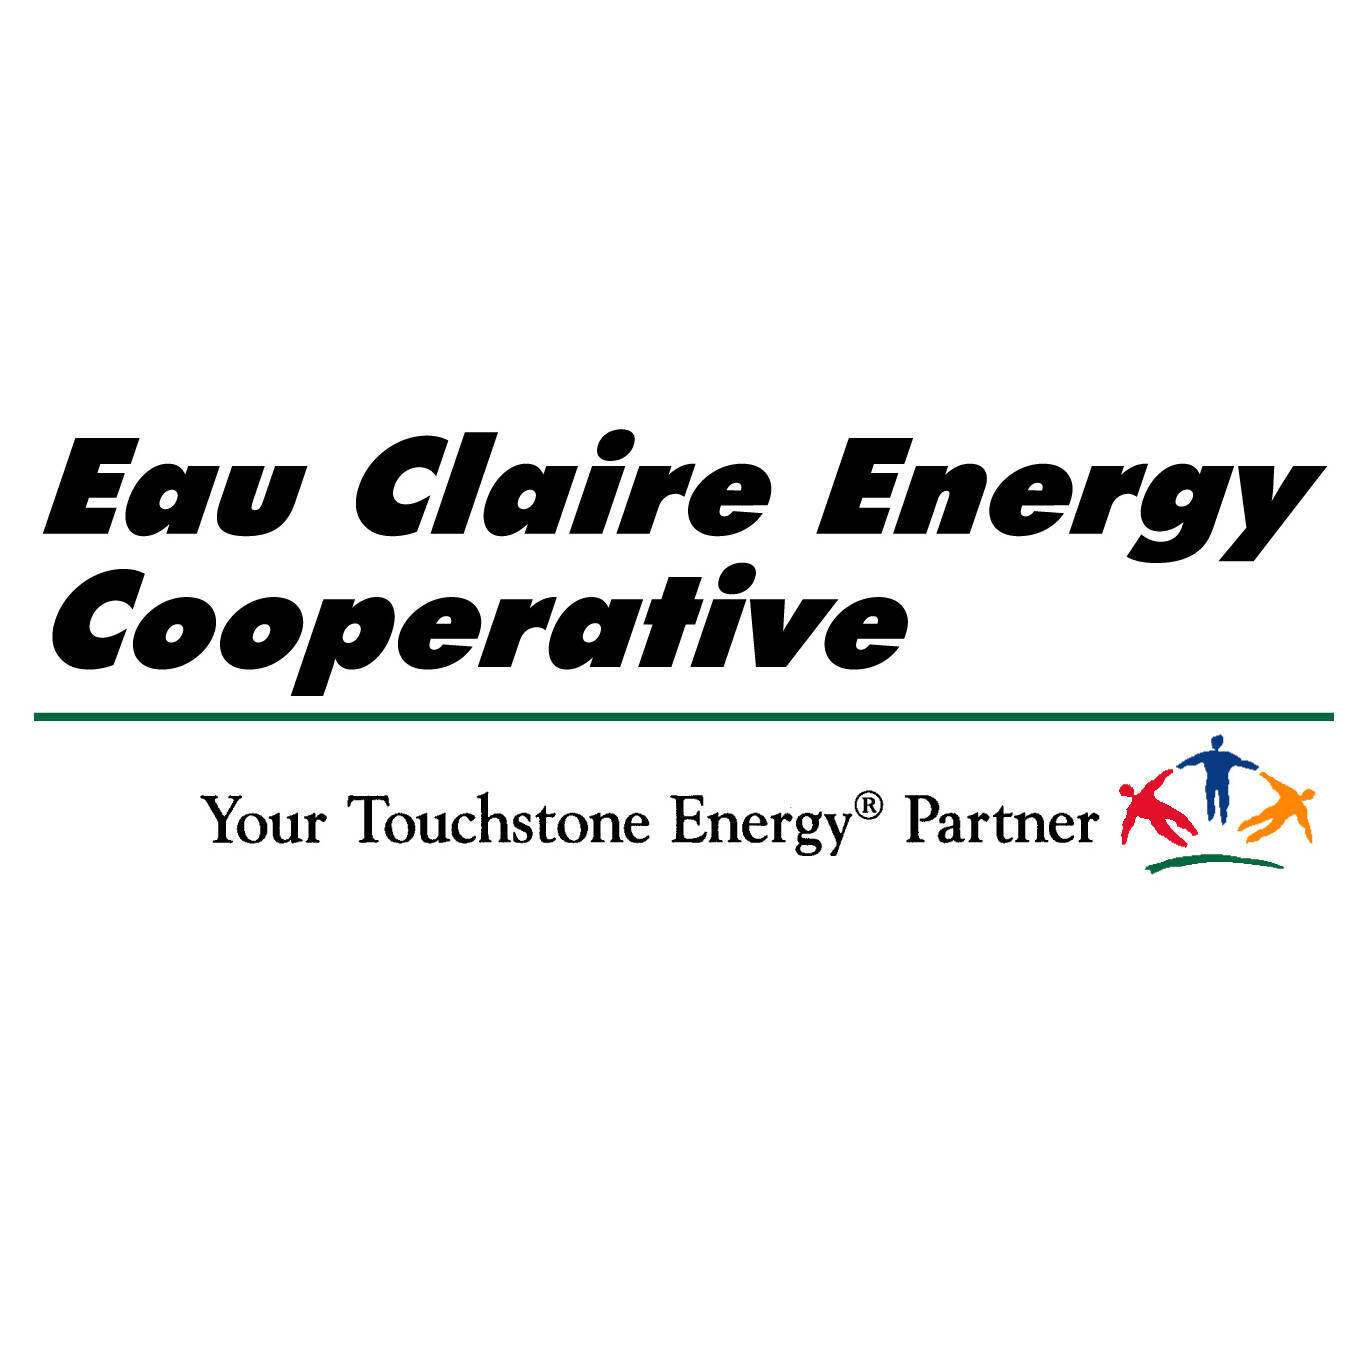 EAU CLAIRE ENERGY COOPERATIVE LINEWORKER SCHOLARSHIP